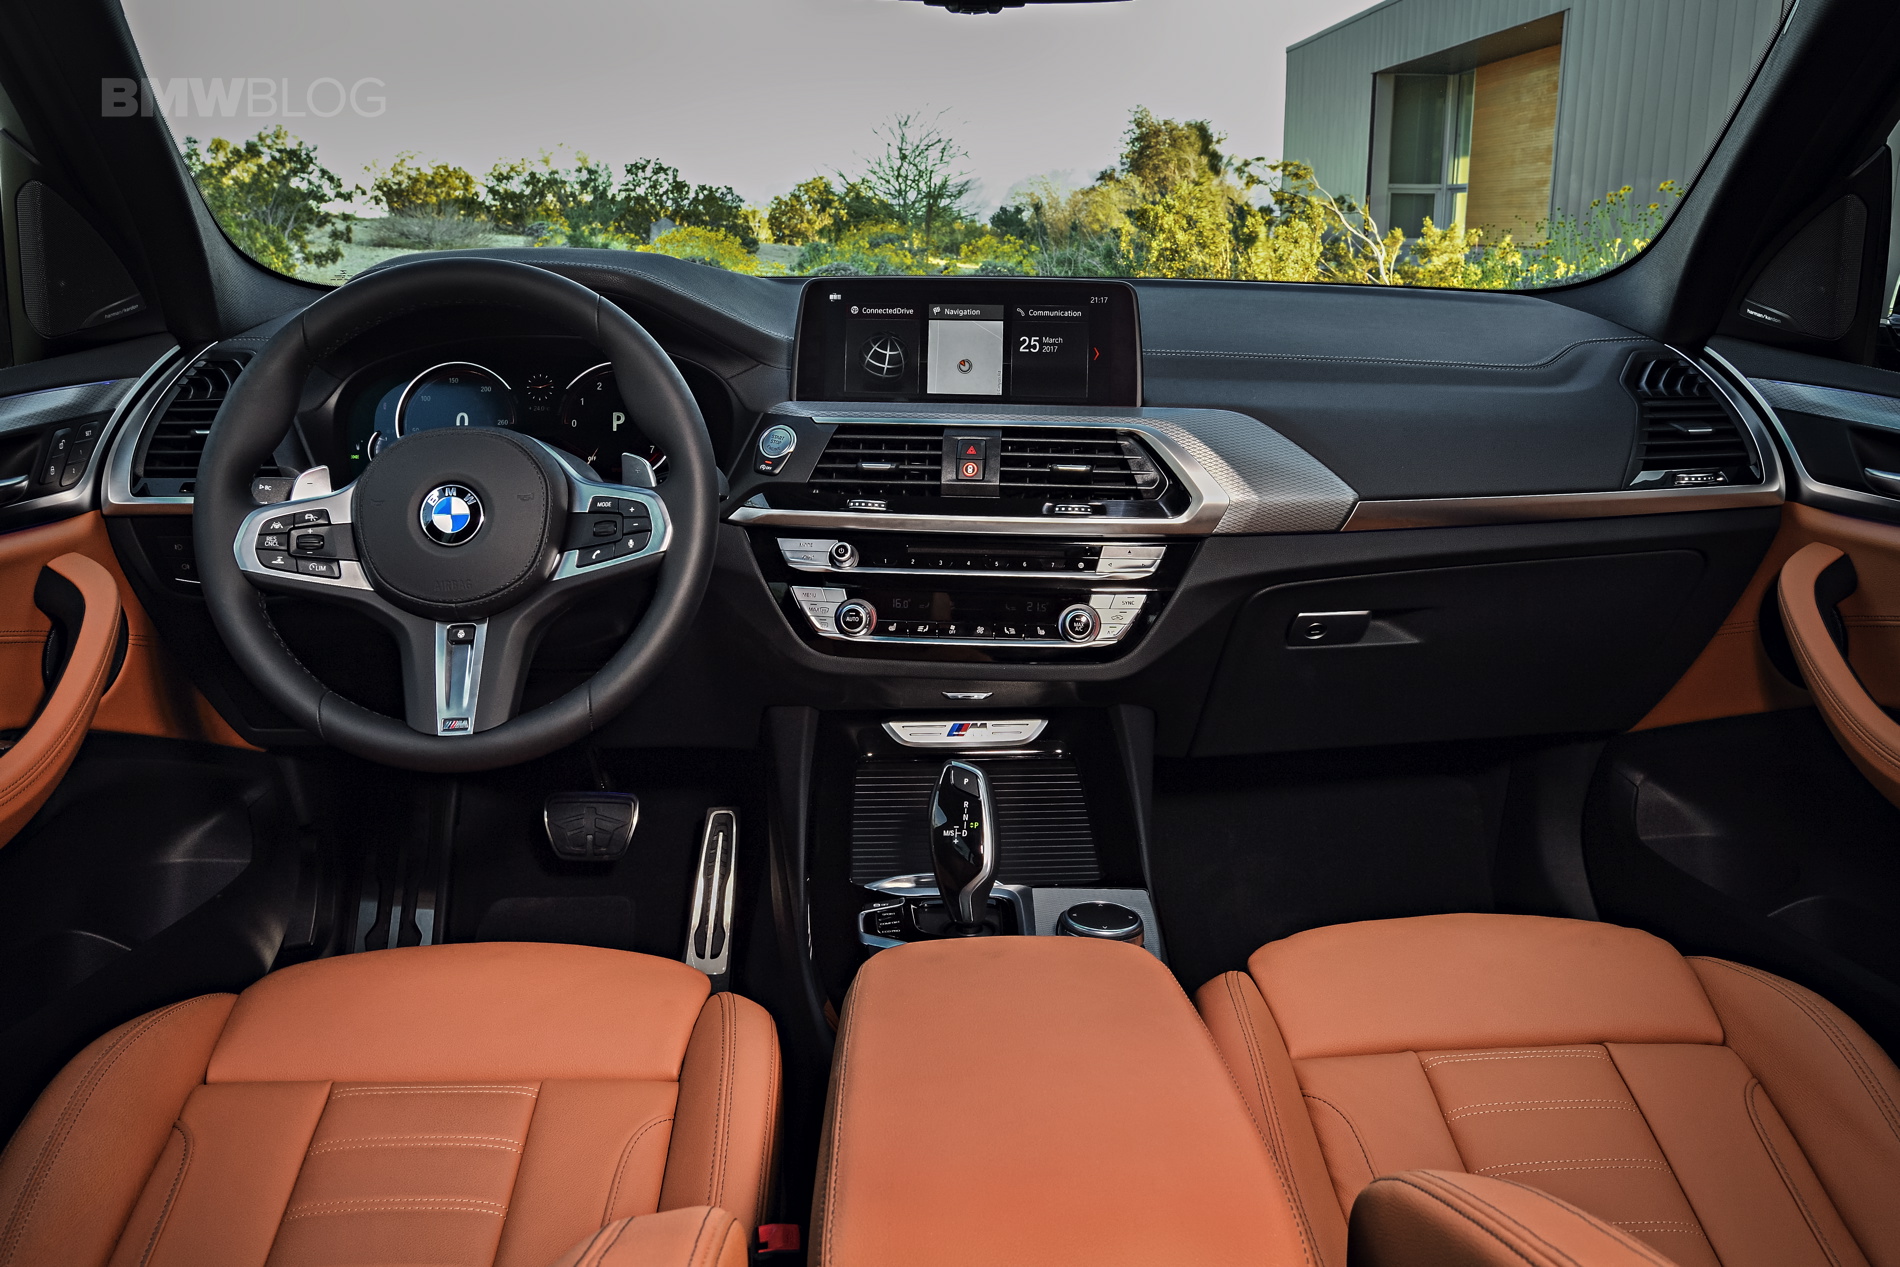 2018-BMW-X3-G01-official-photos-23.jpg